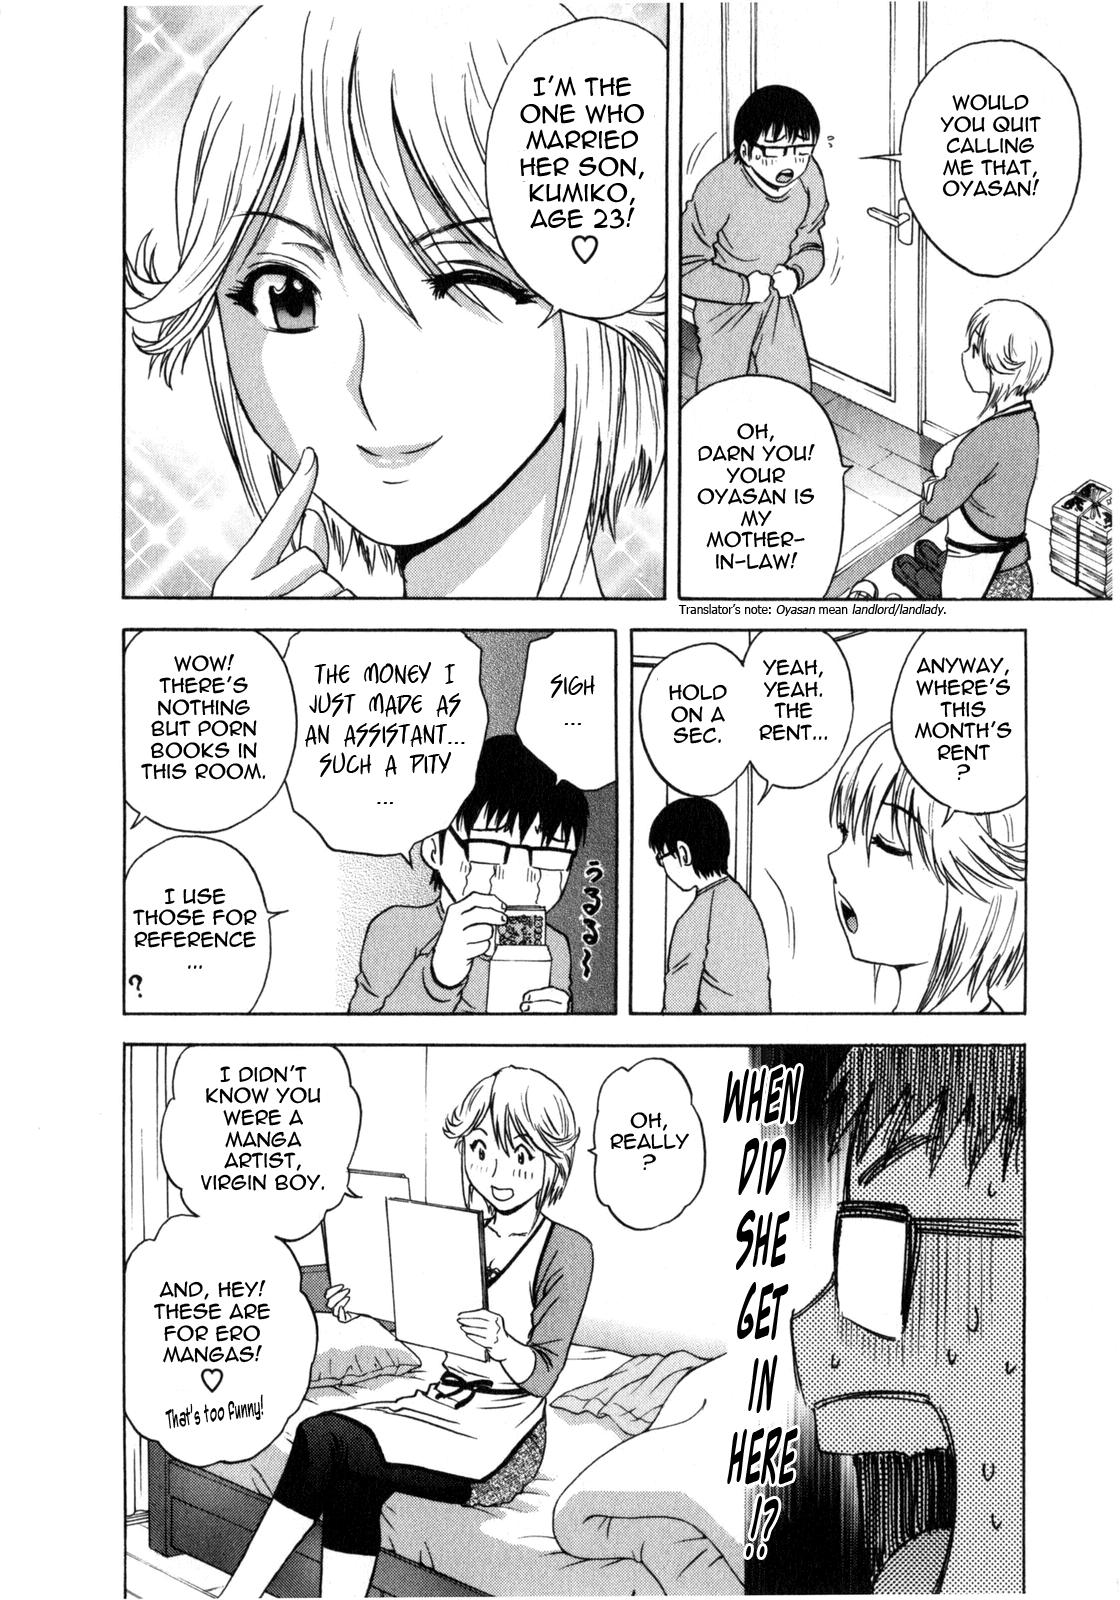 [Hidemaru] Life with Married Women Just Like a Manga 1 - Ch. 1-3 [English] {Tadanohito} 29